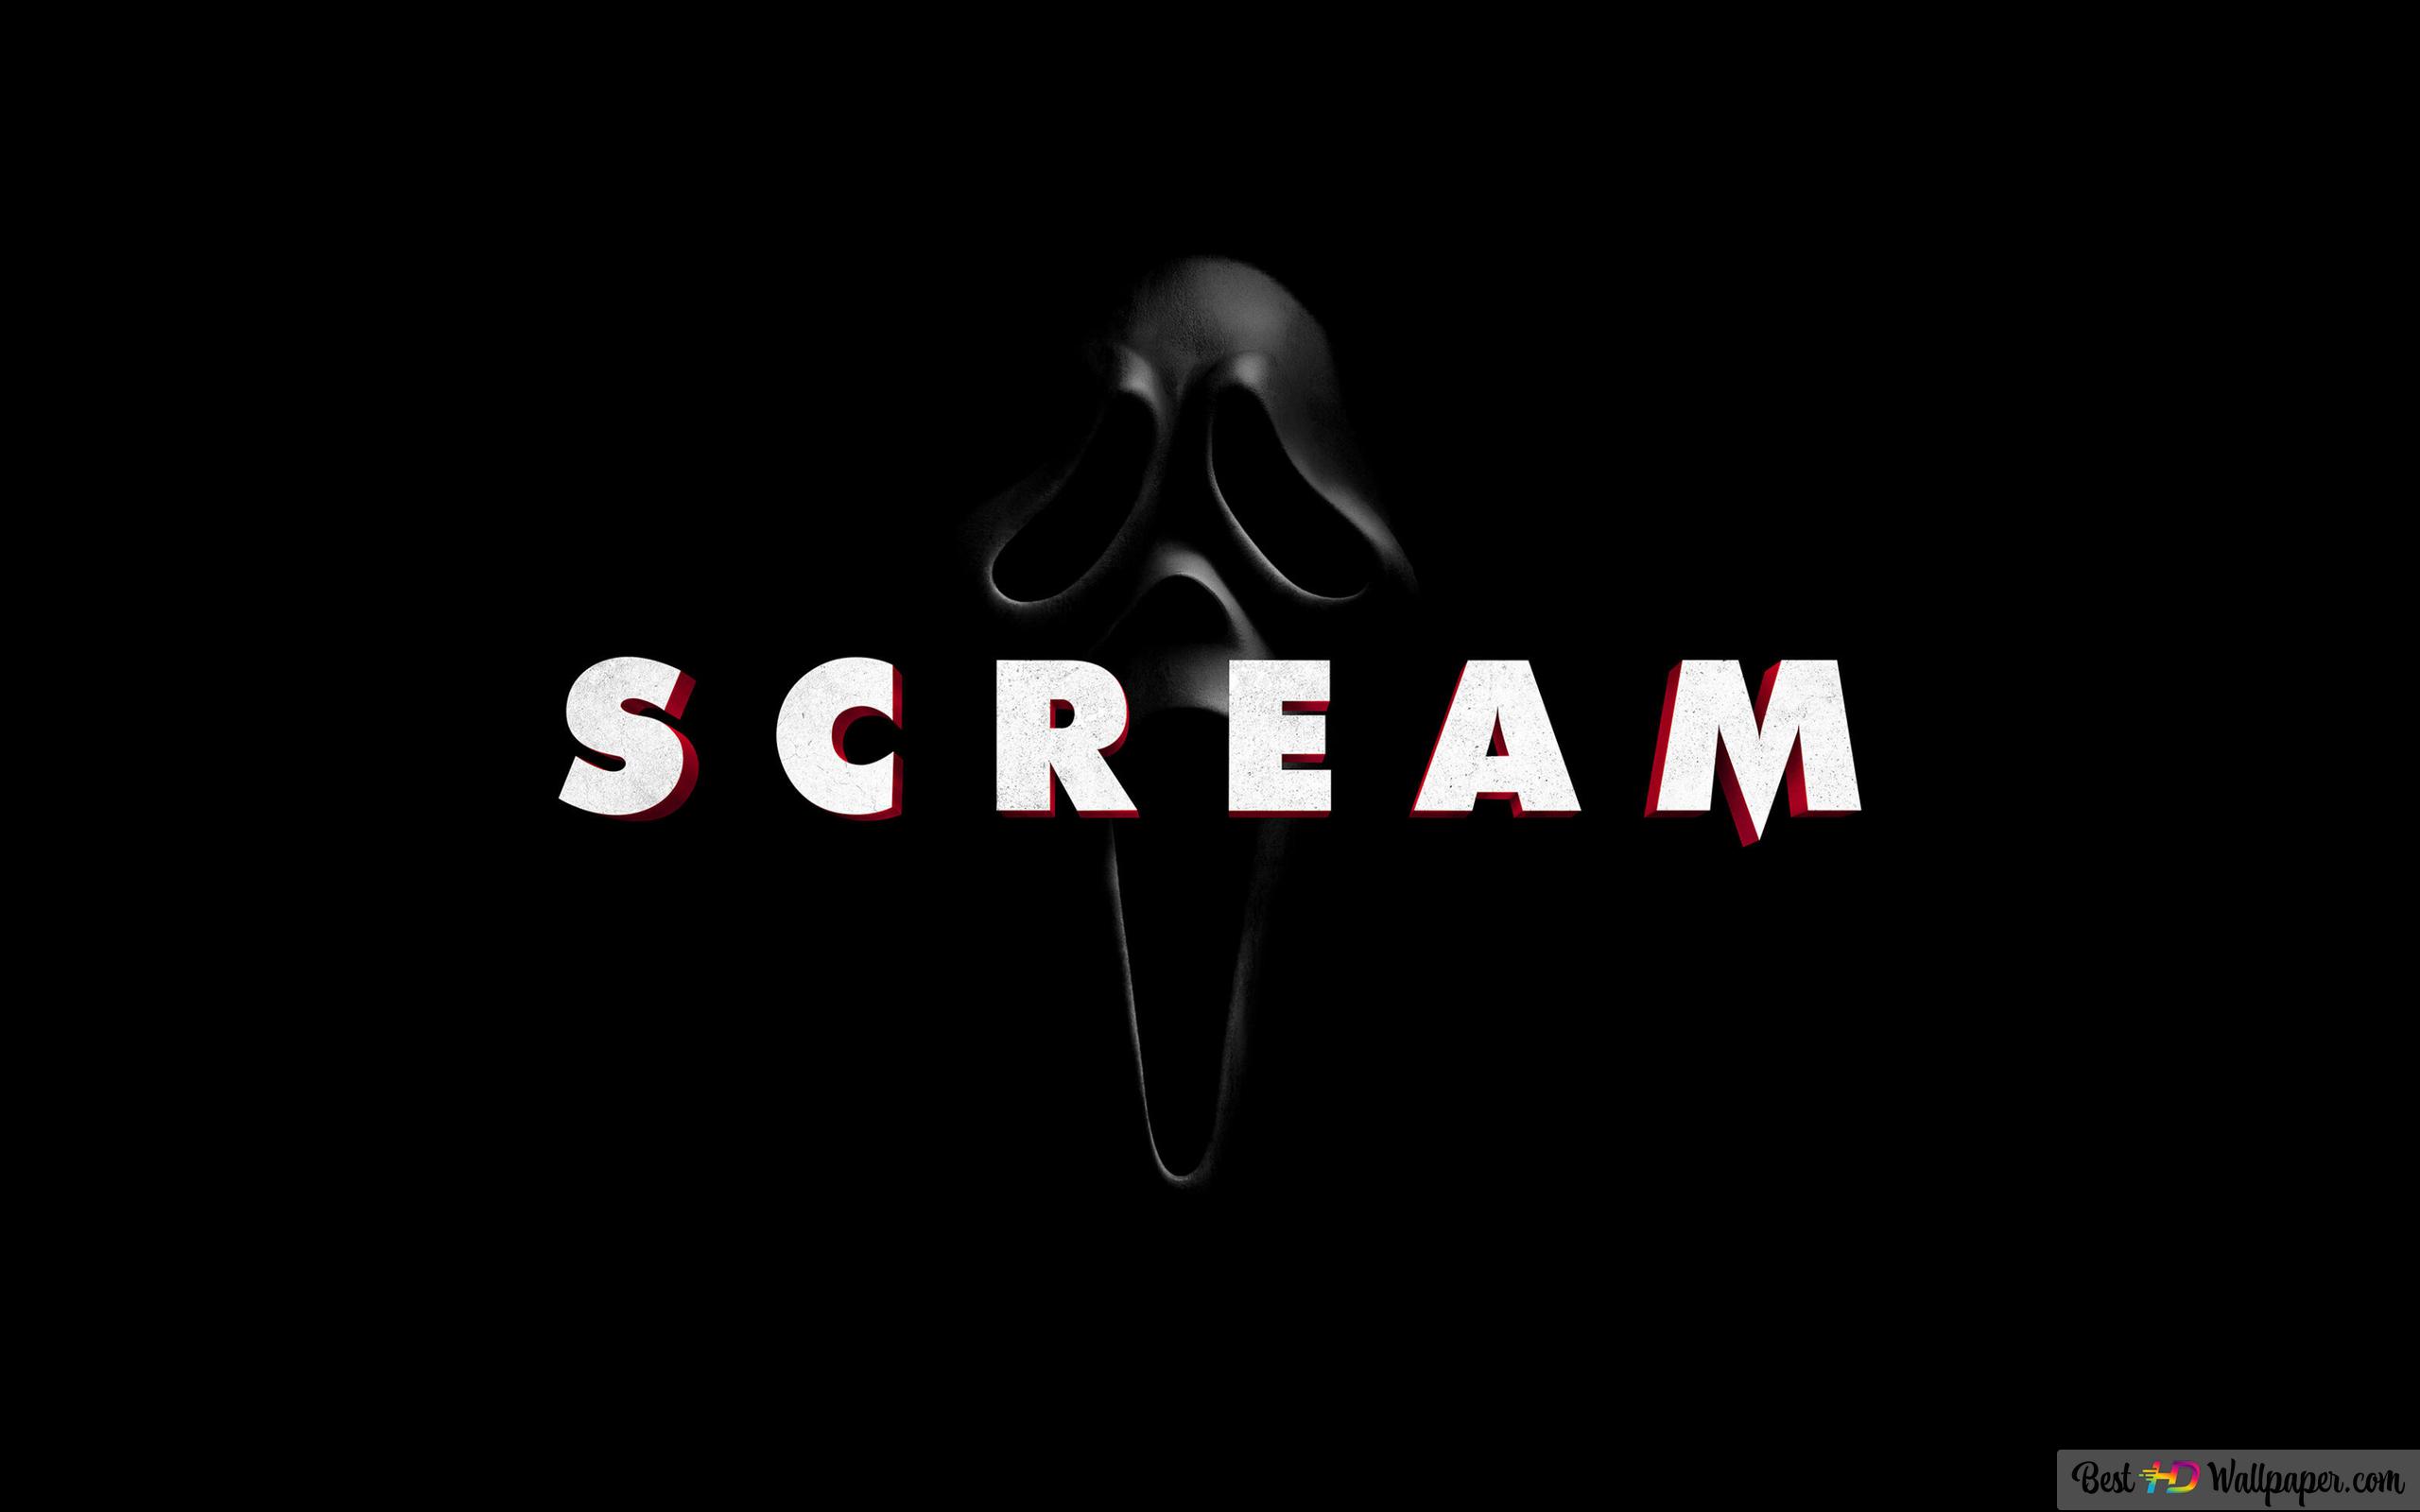 Scream movie soon HD wallpaper download Movies wallpapers